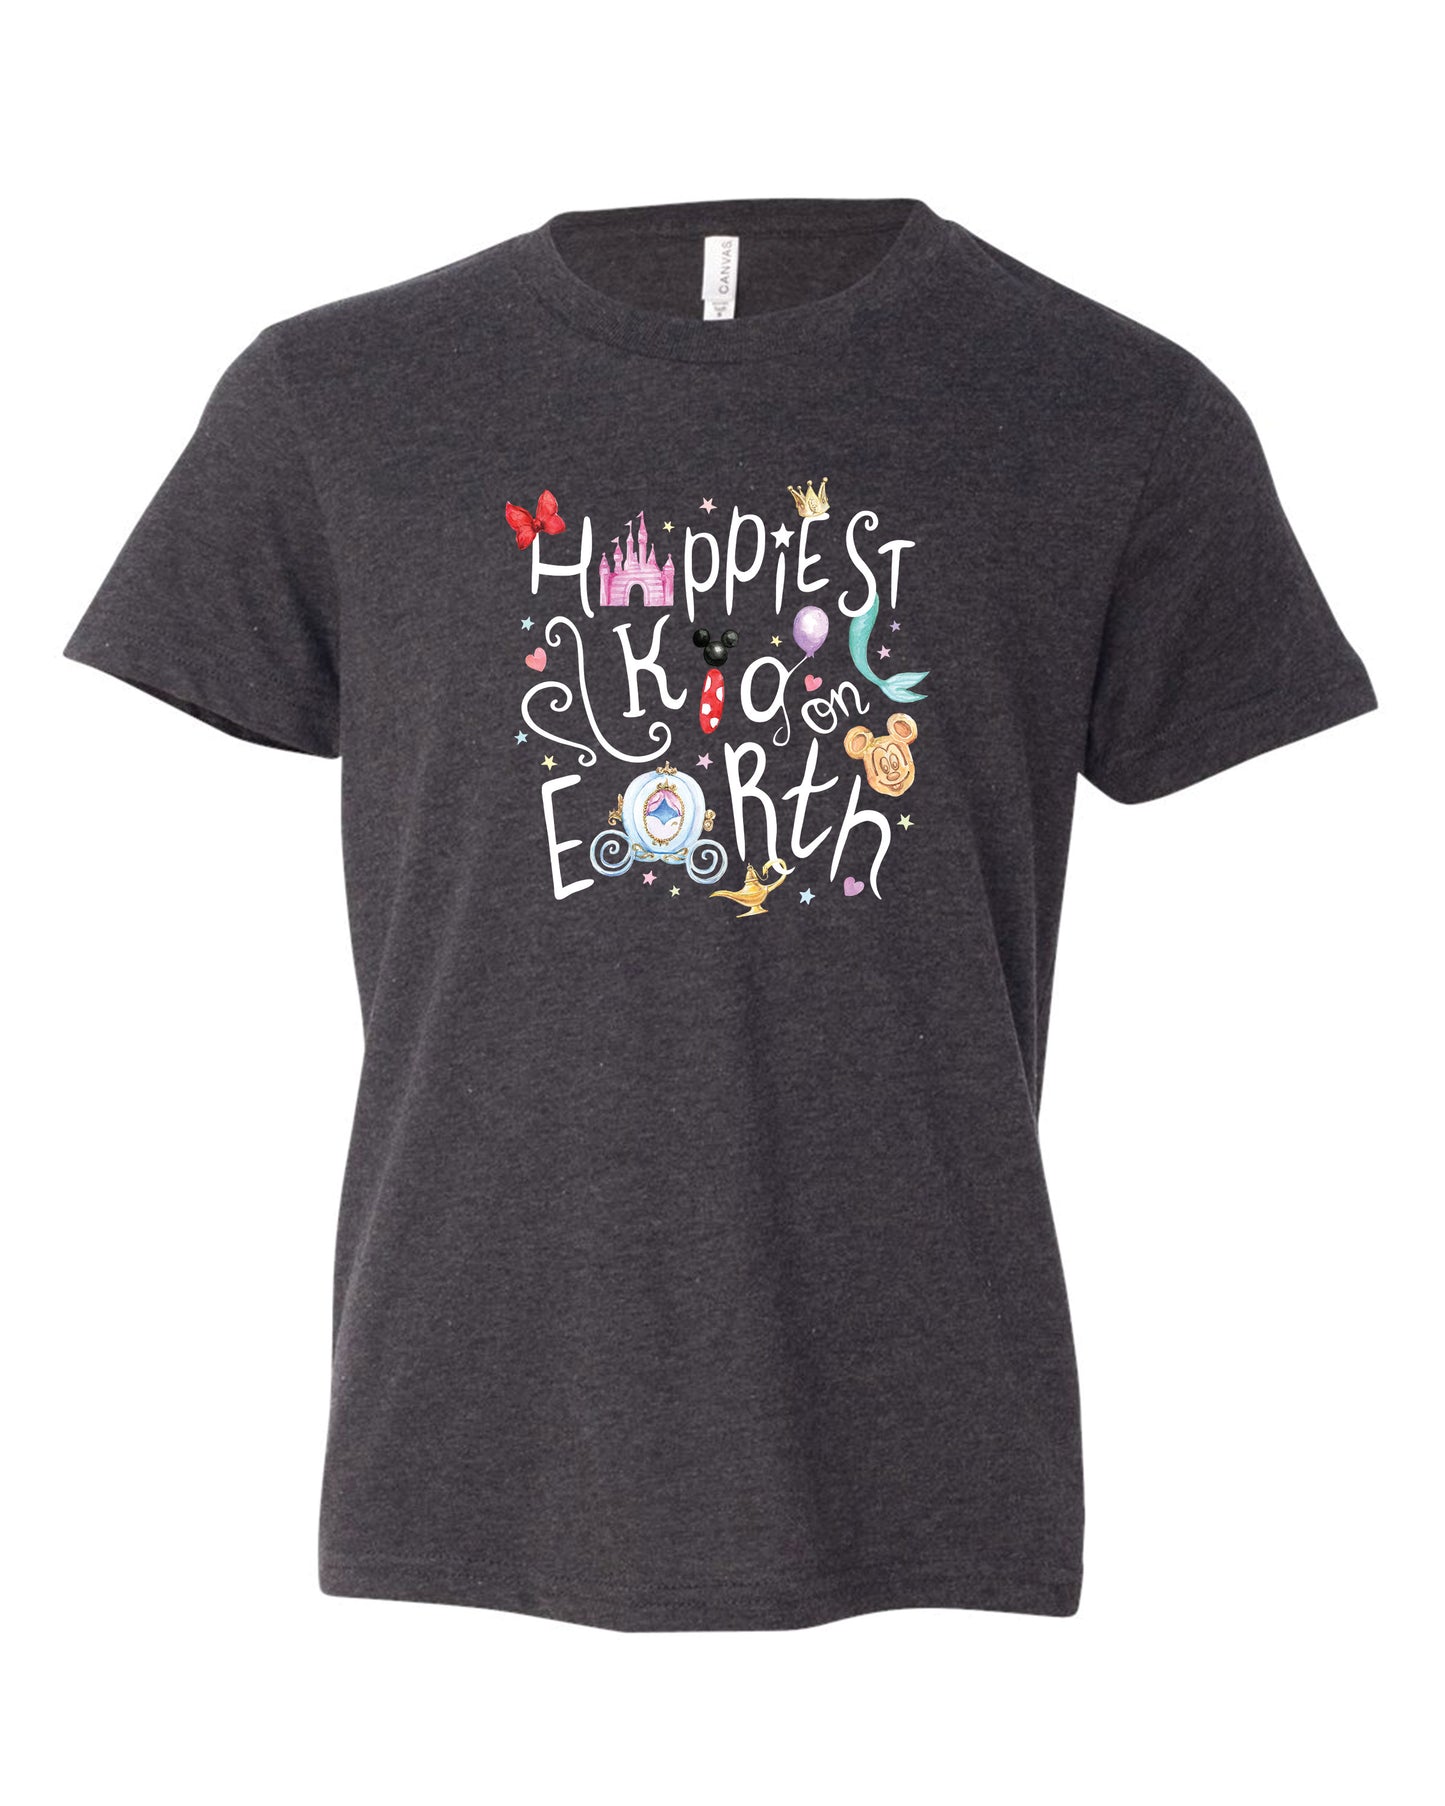 Happiest Kid On Earth | Tee | Kids-Kids Tees-Shirt Shop-Sister Shirts, Cute & Custom Tees for Mama & Littles in Trussville, Alabama.